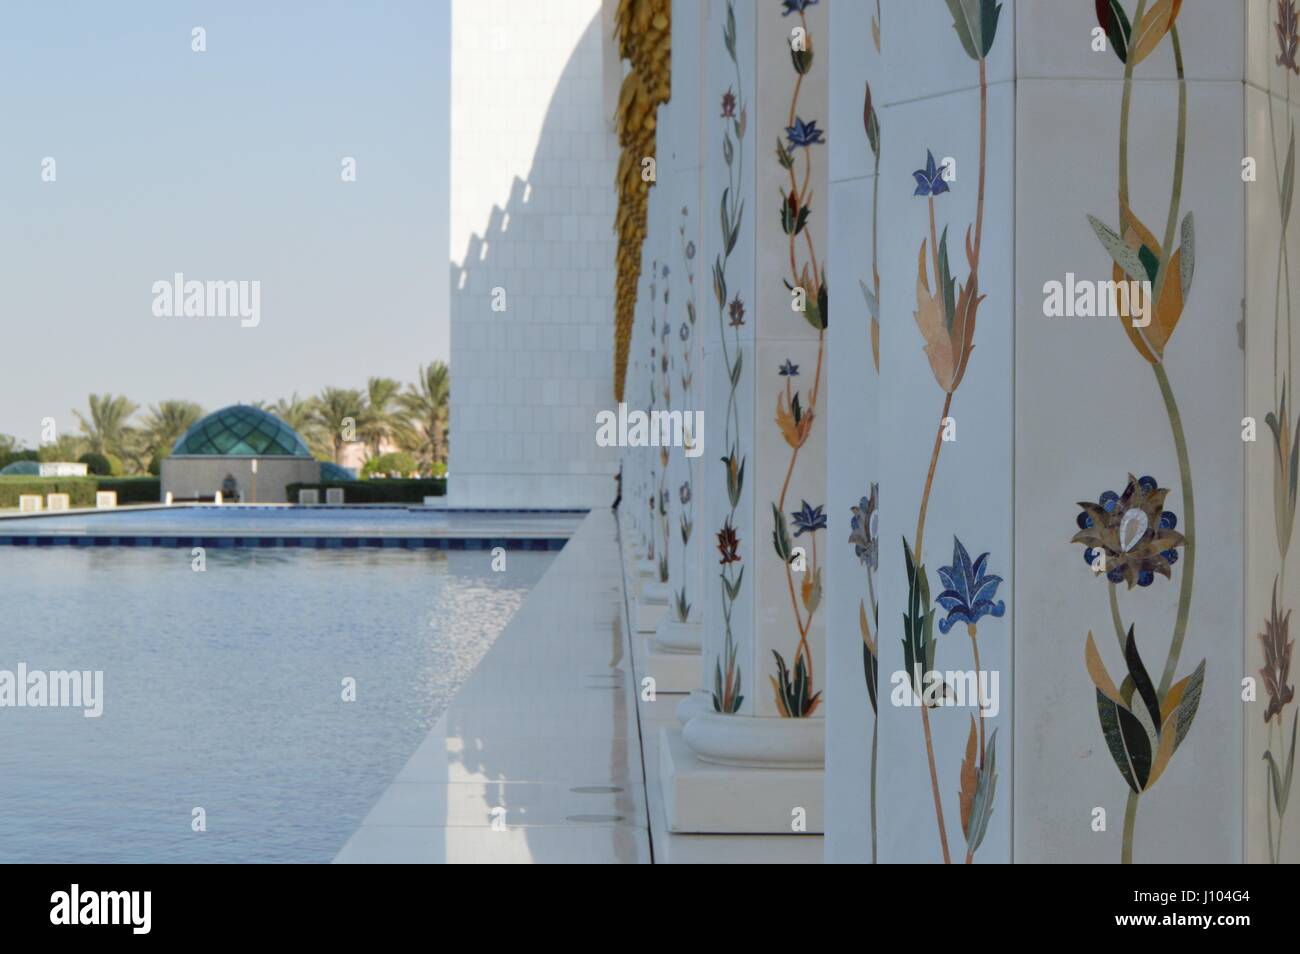 Islamic patterns on mosque pillars Stock Photo